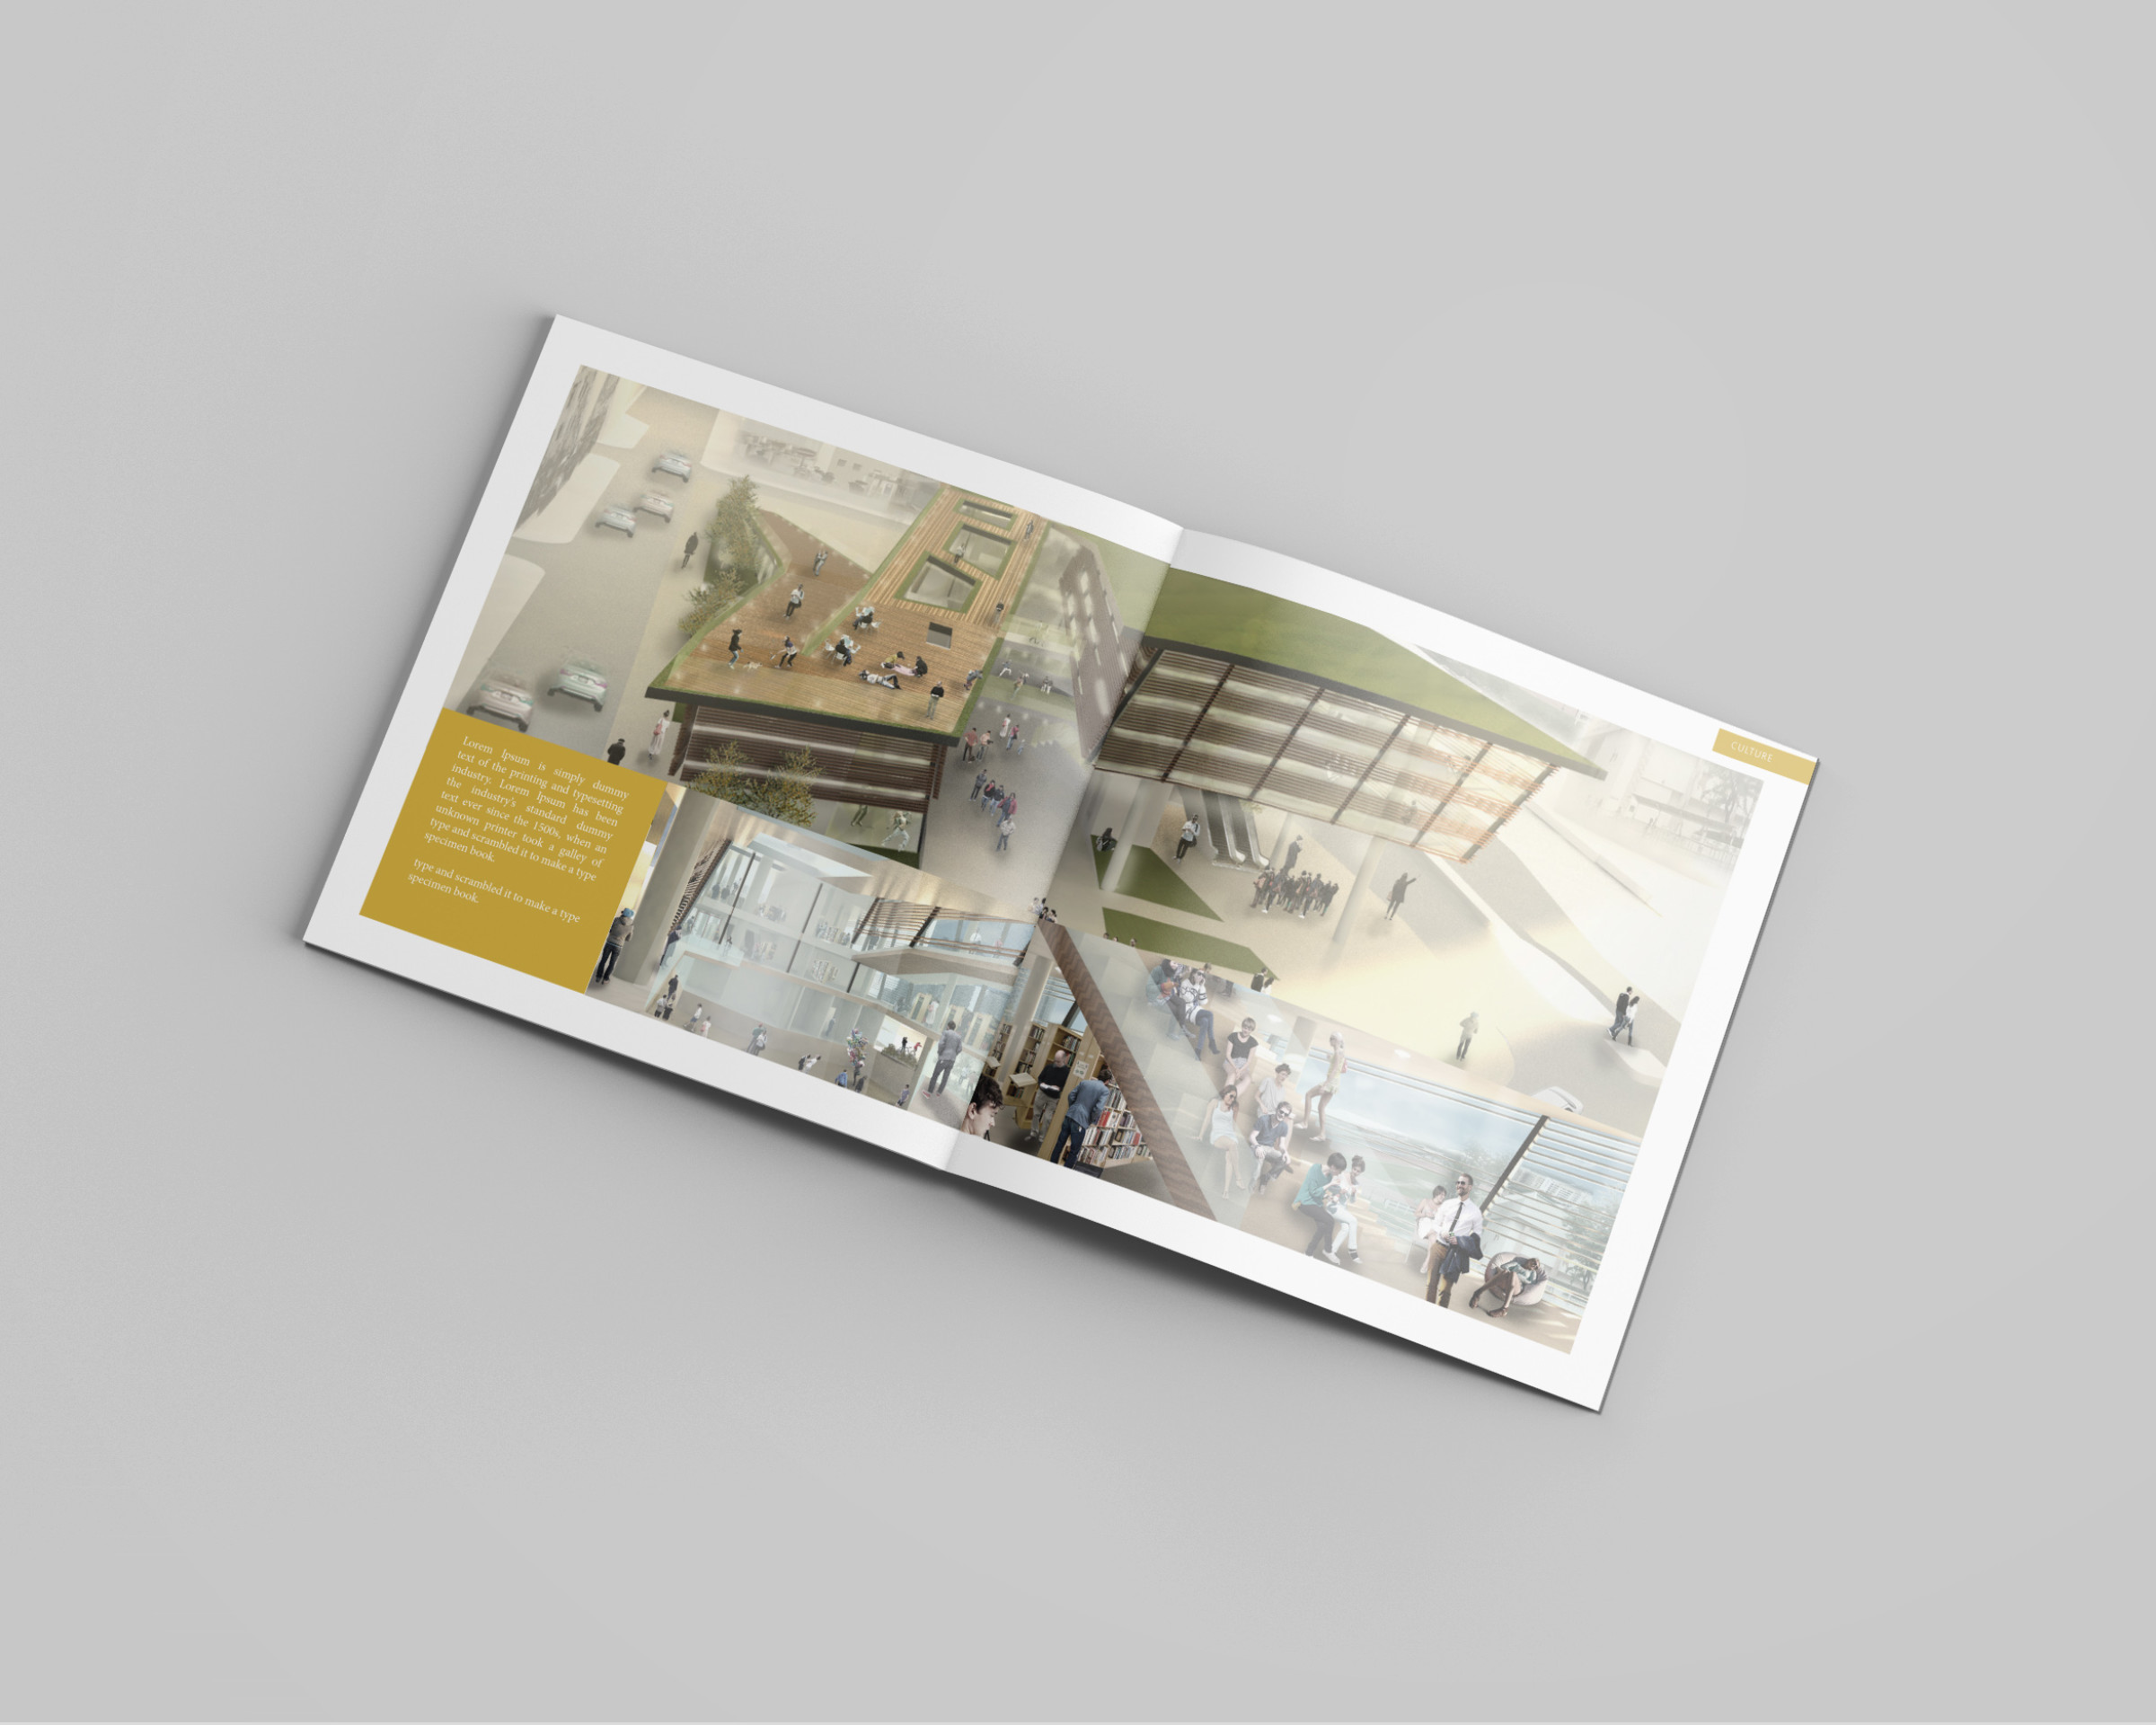 HKDI architecture division showcase book design Hong Kong